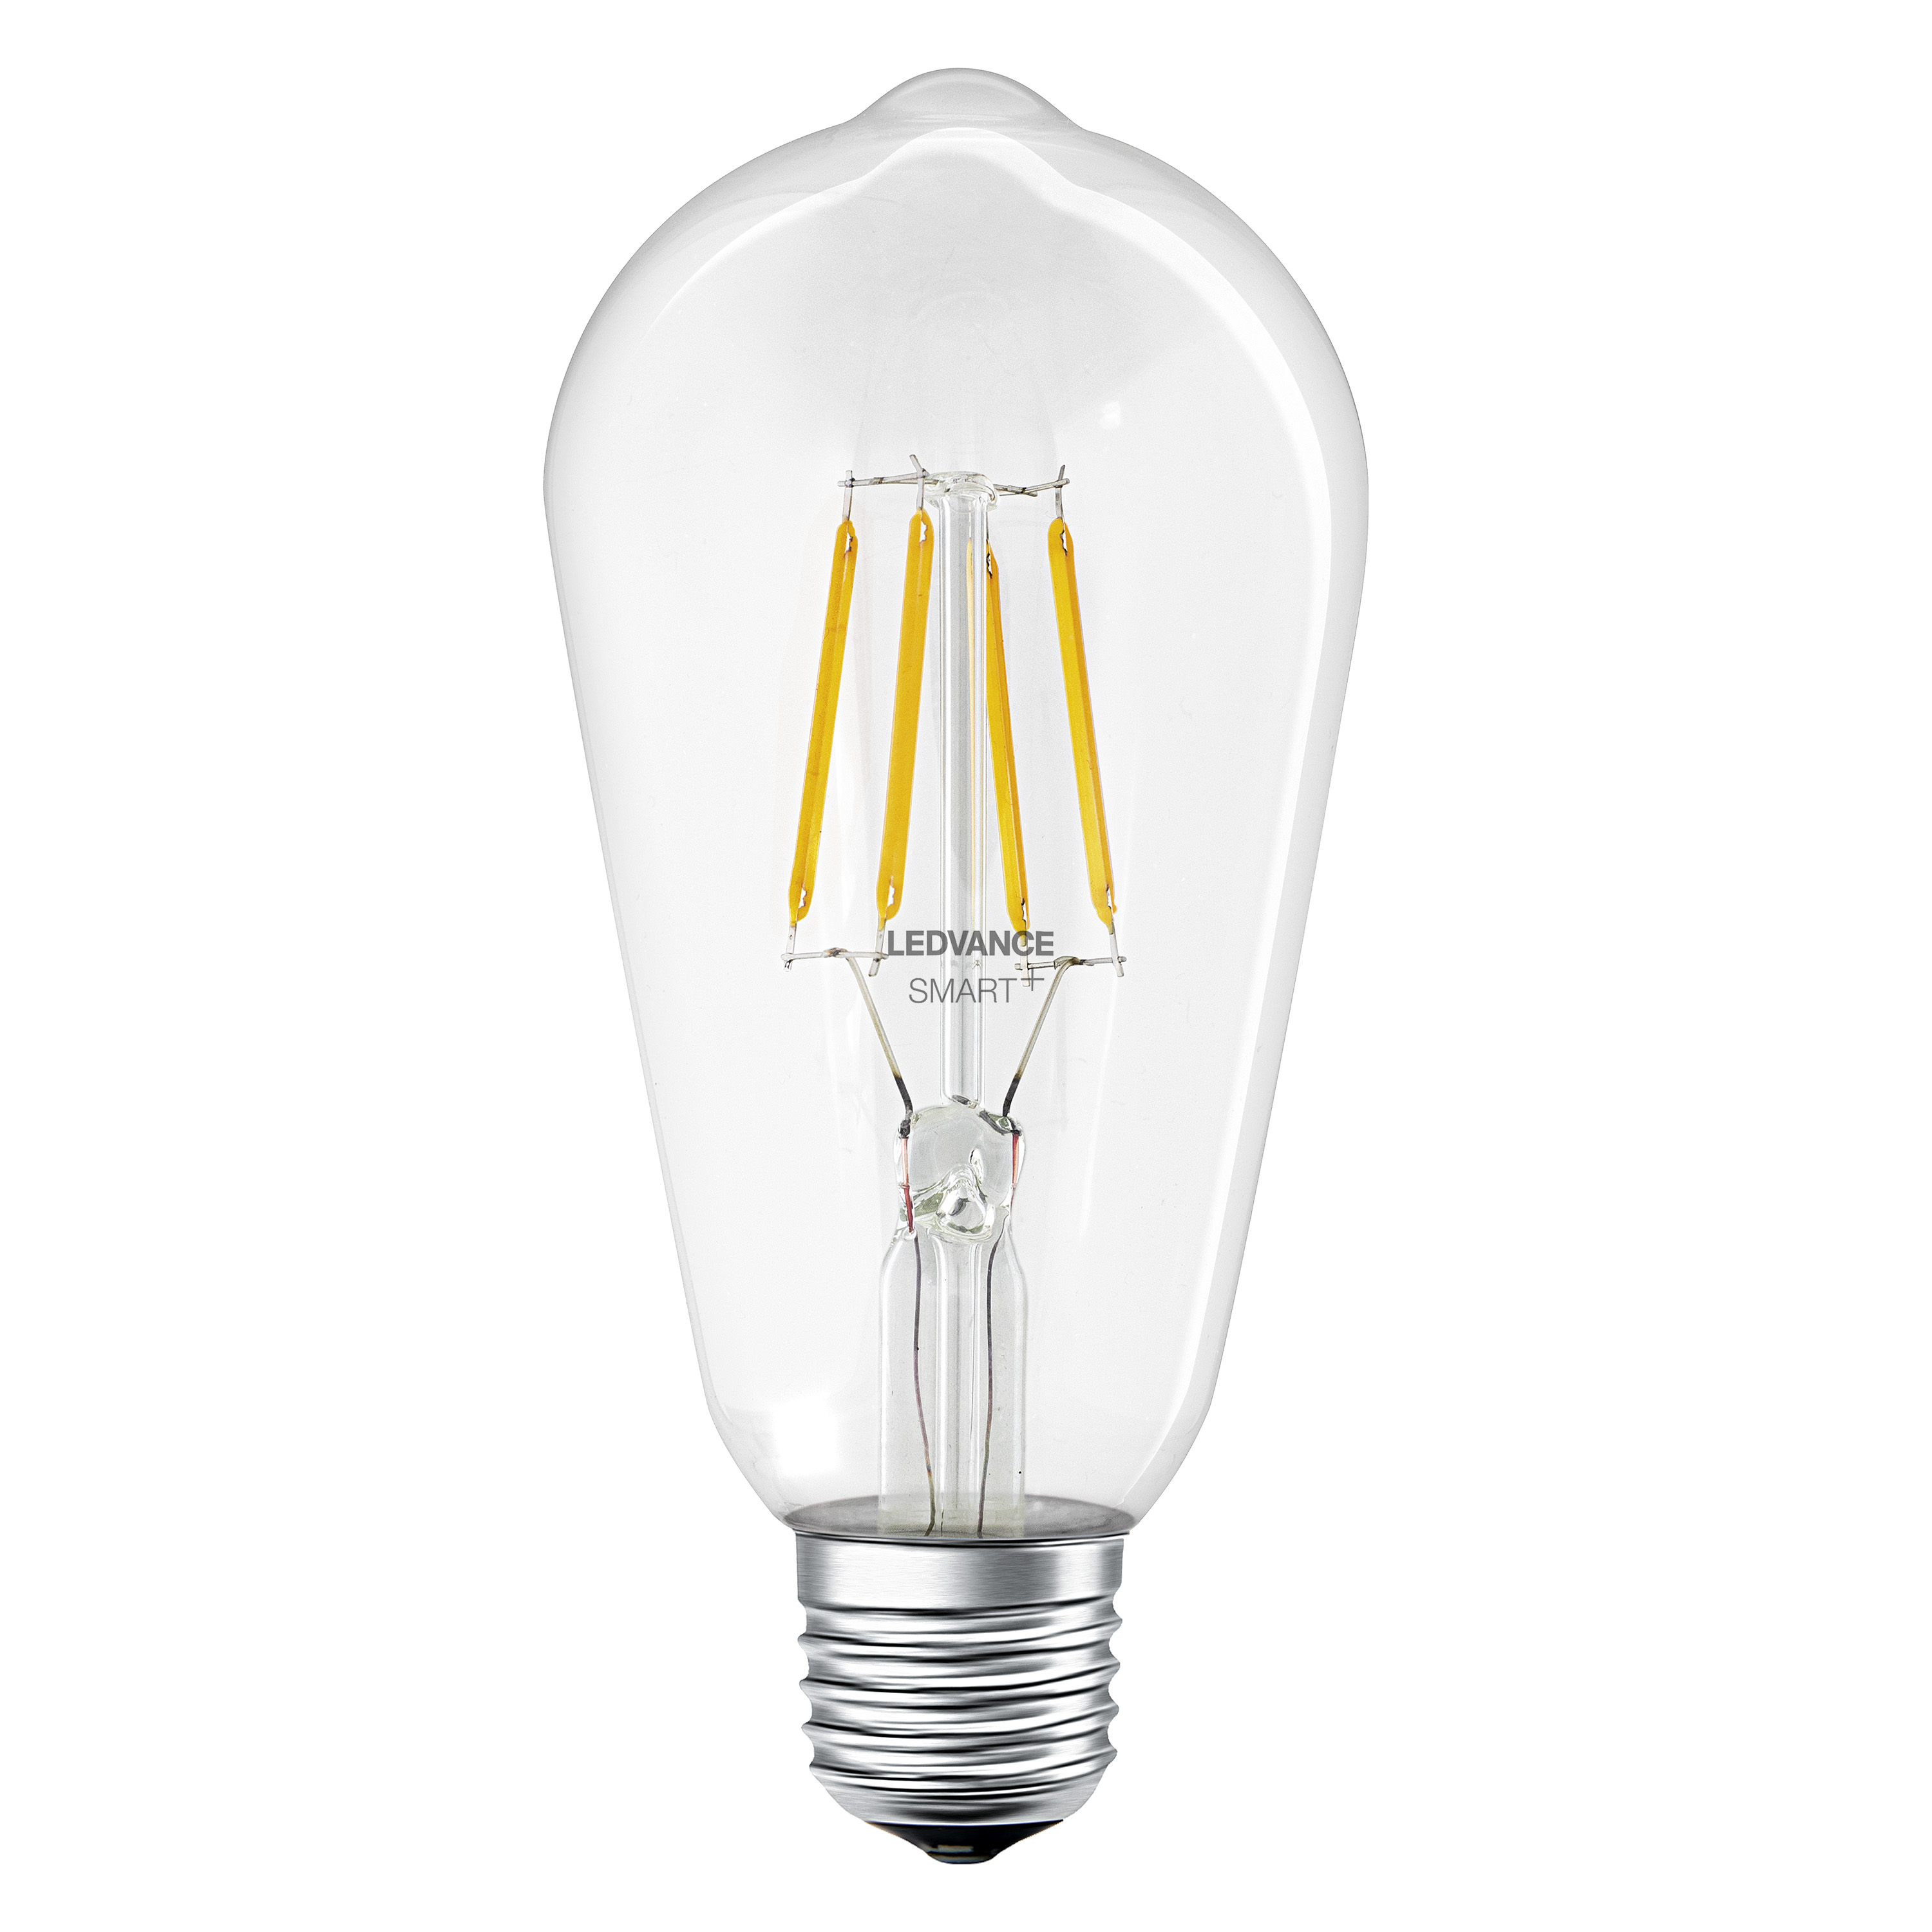 SMART+ Filament LED Edison Kaltweiß LEDVANCE Lampe Dimmable